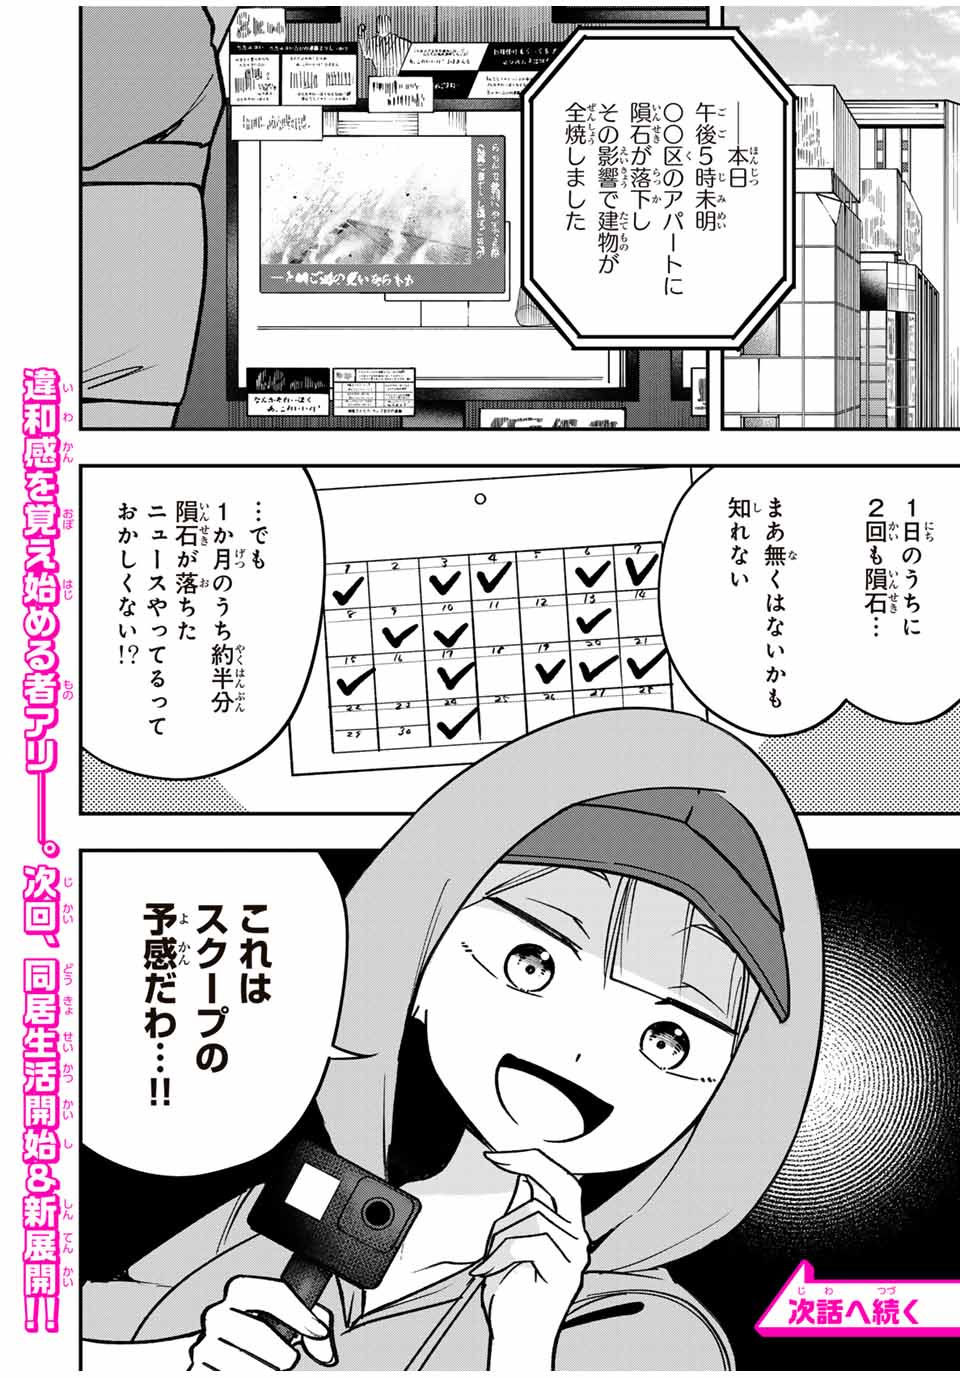 Heroine wa xx Okasegitai - Chapter 6 - Page 26